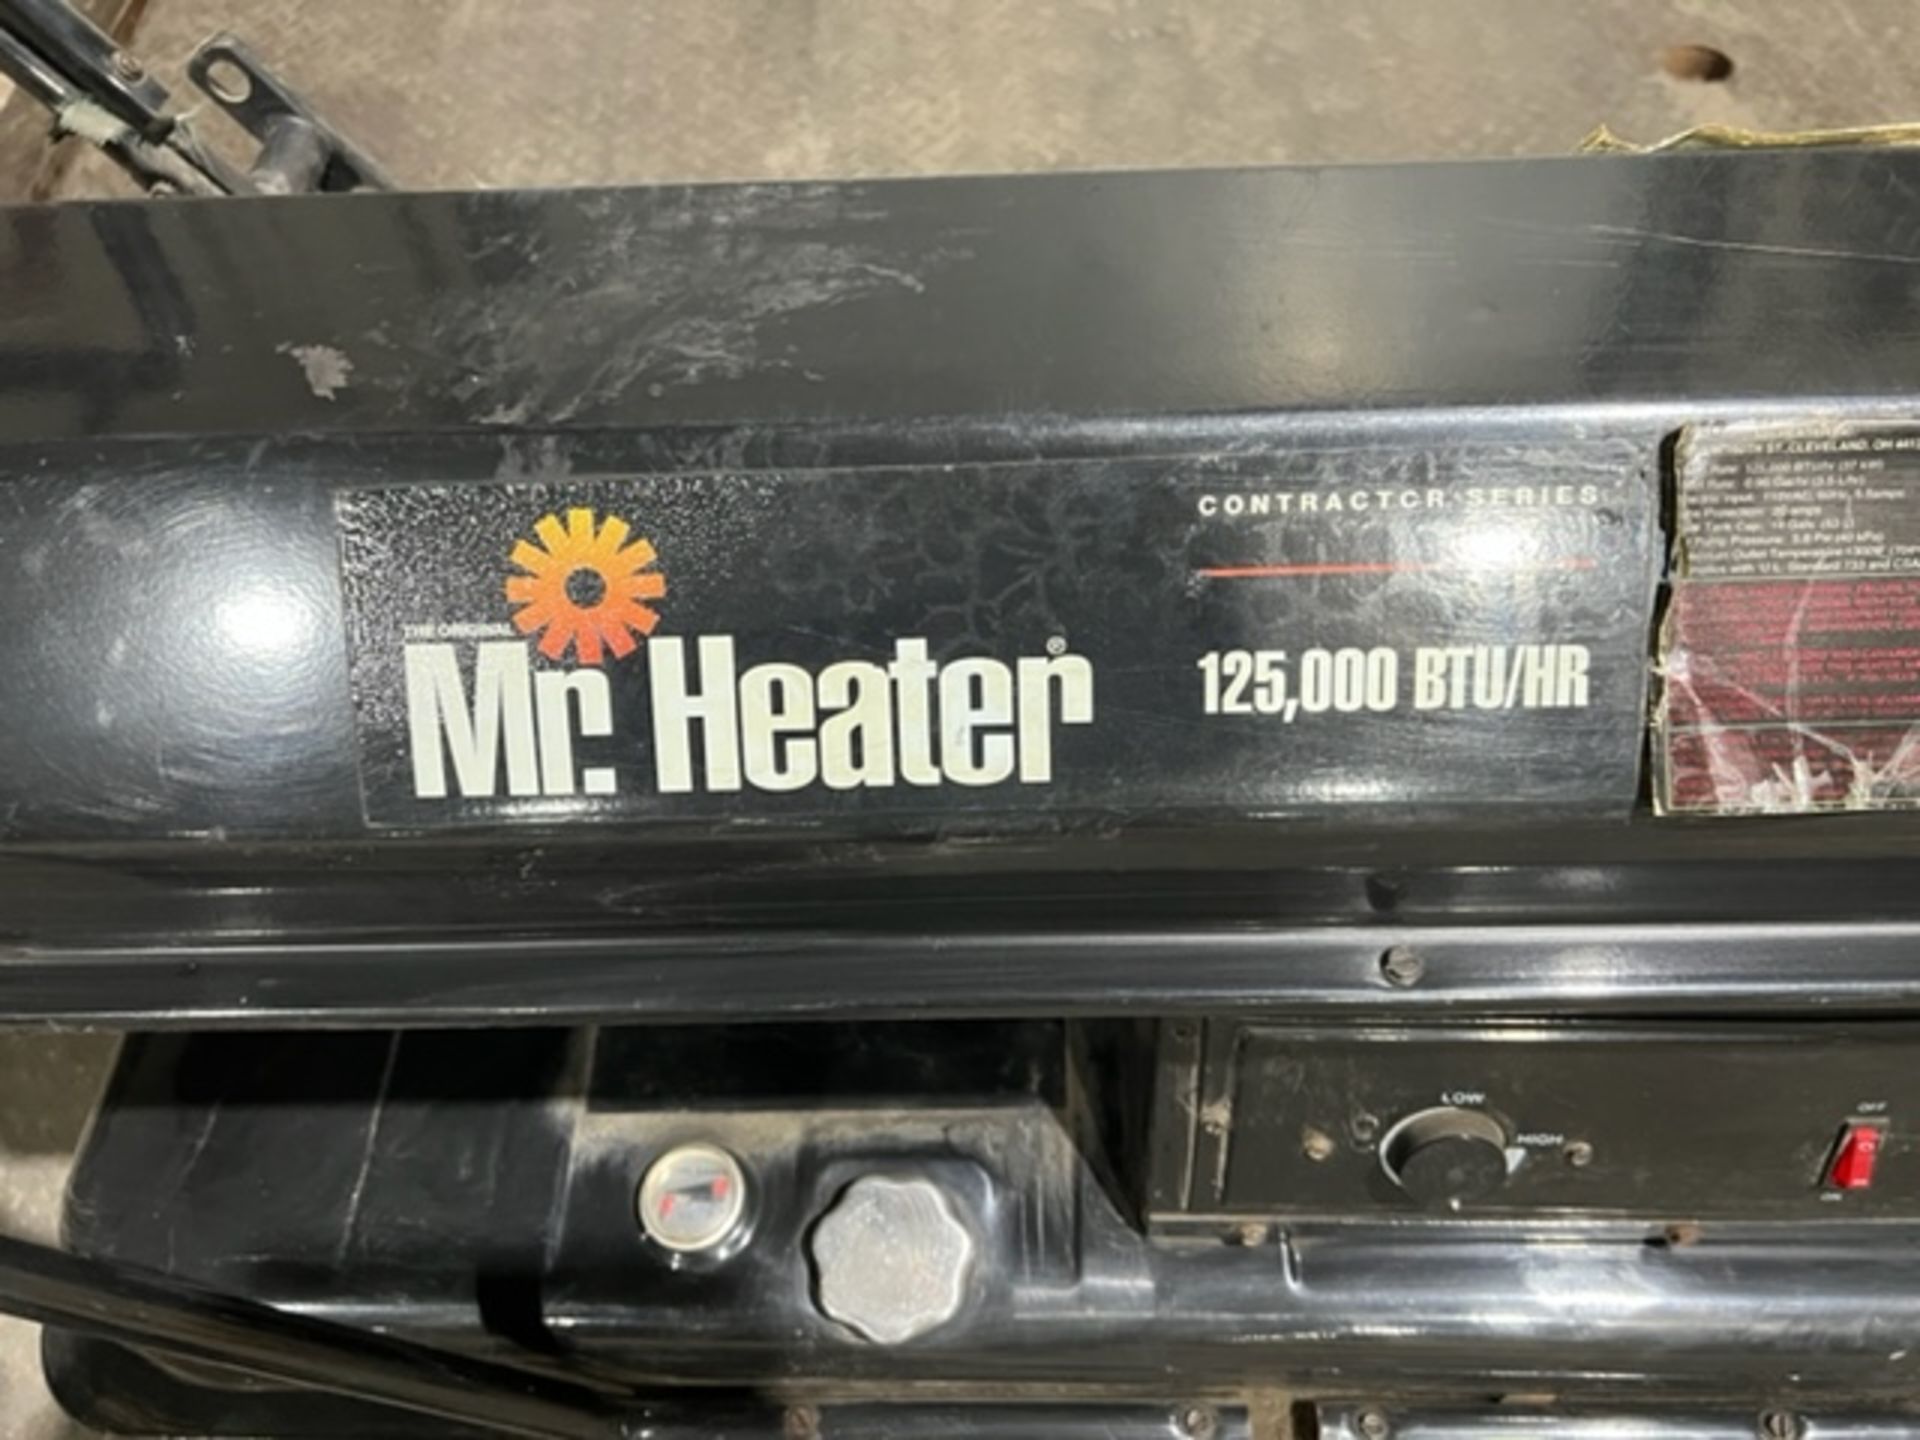 Mr. Heater 125,000 BTU/HR Portable Heater Blower Unit - Image 2 of 3